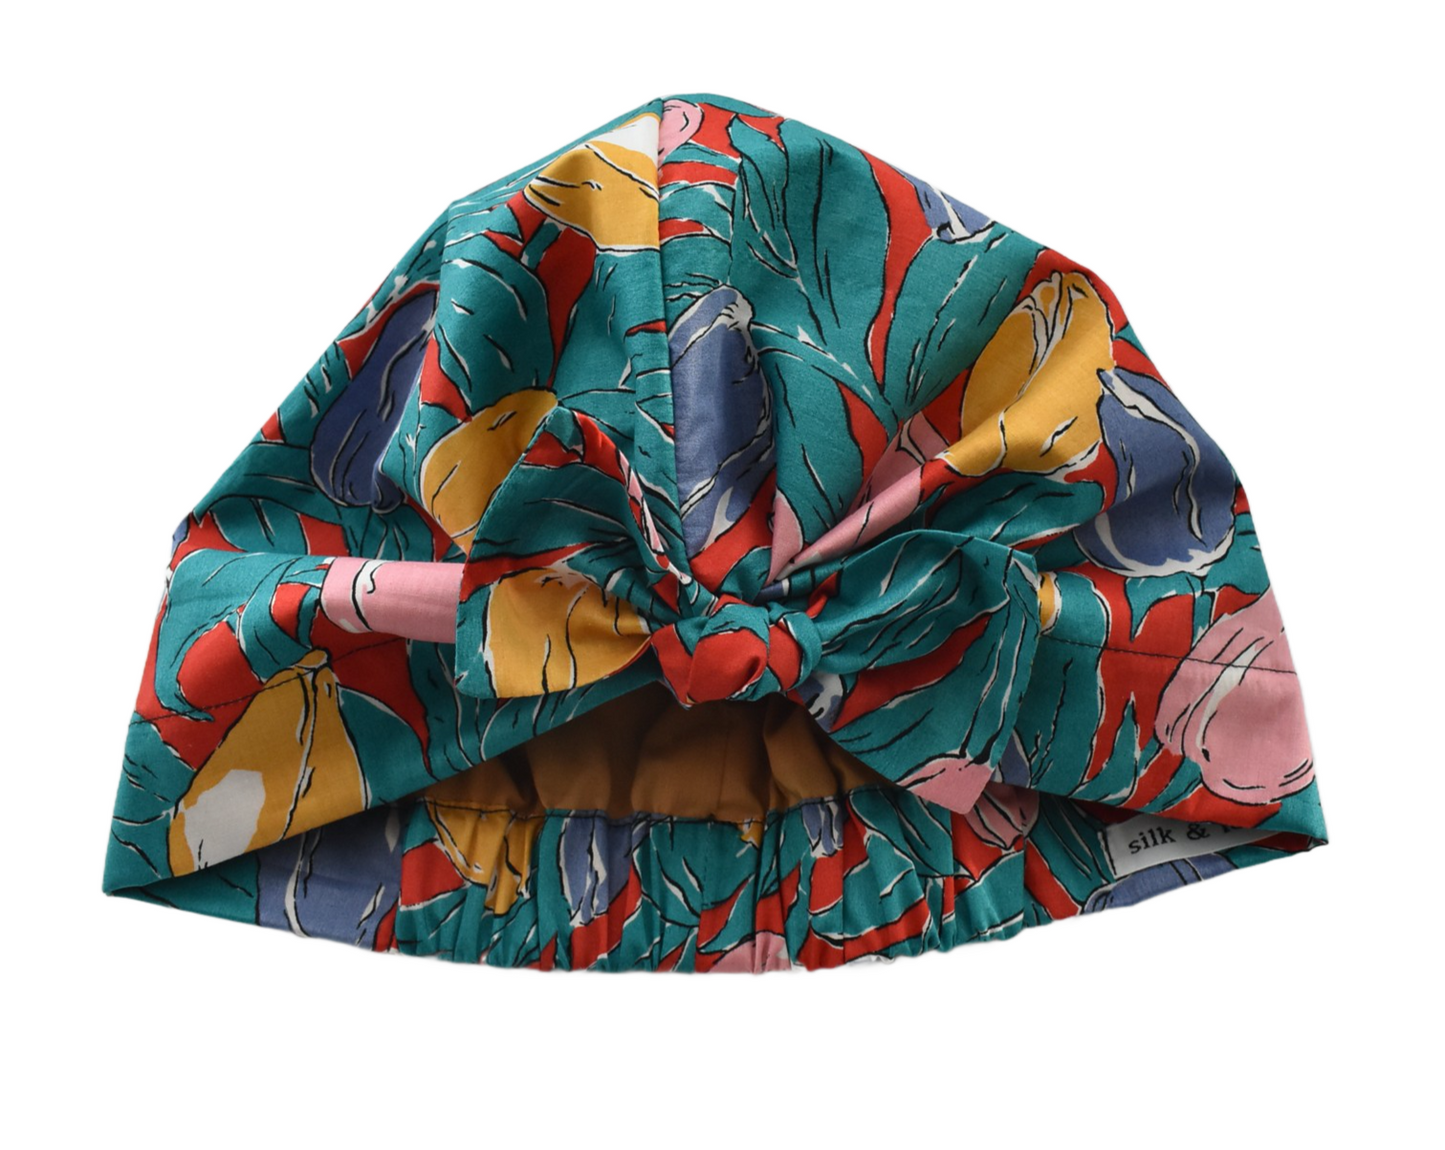 Ladies Turban Hat - Vintage Liberty of London Tulip - Bright floral